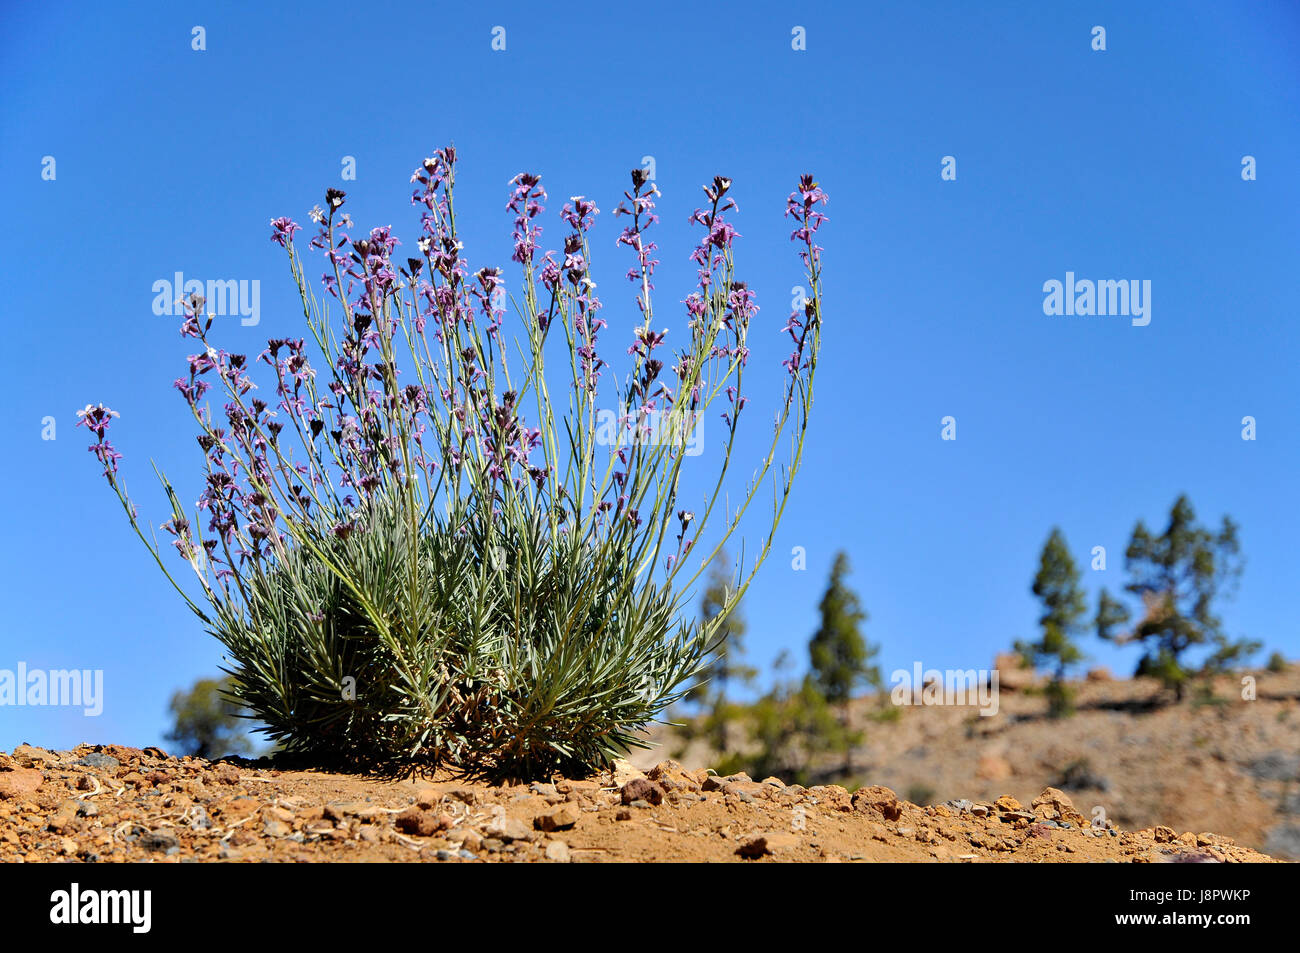 canary, wallflower, blue, closeup, europe, spain, archipelago, stalk, stem, Stock Photo